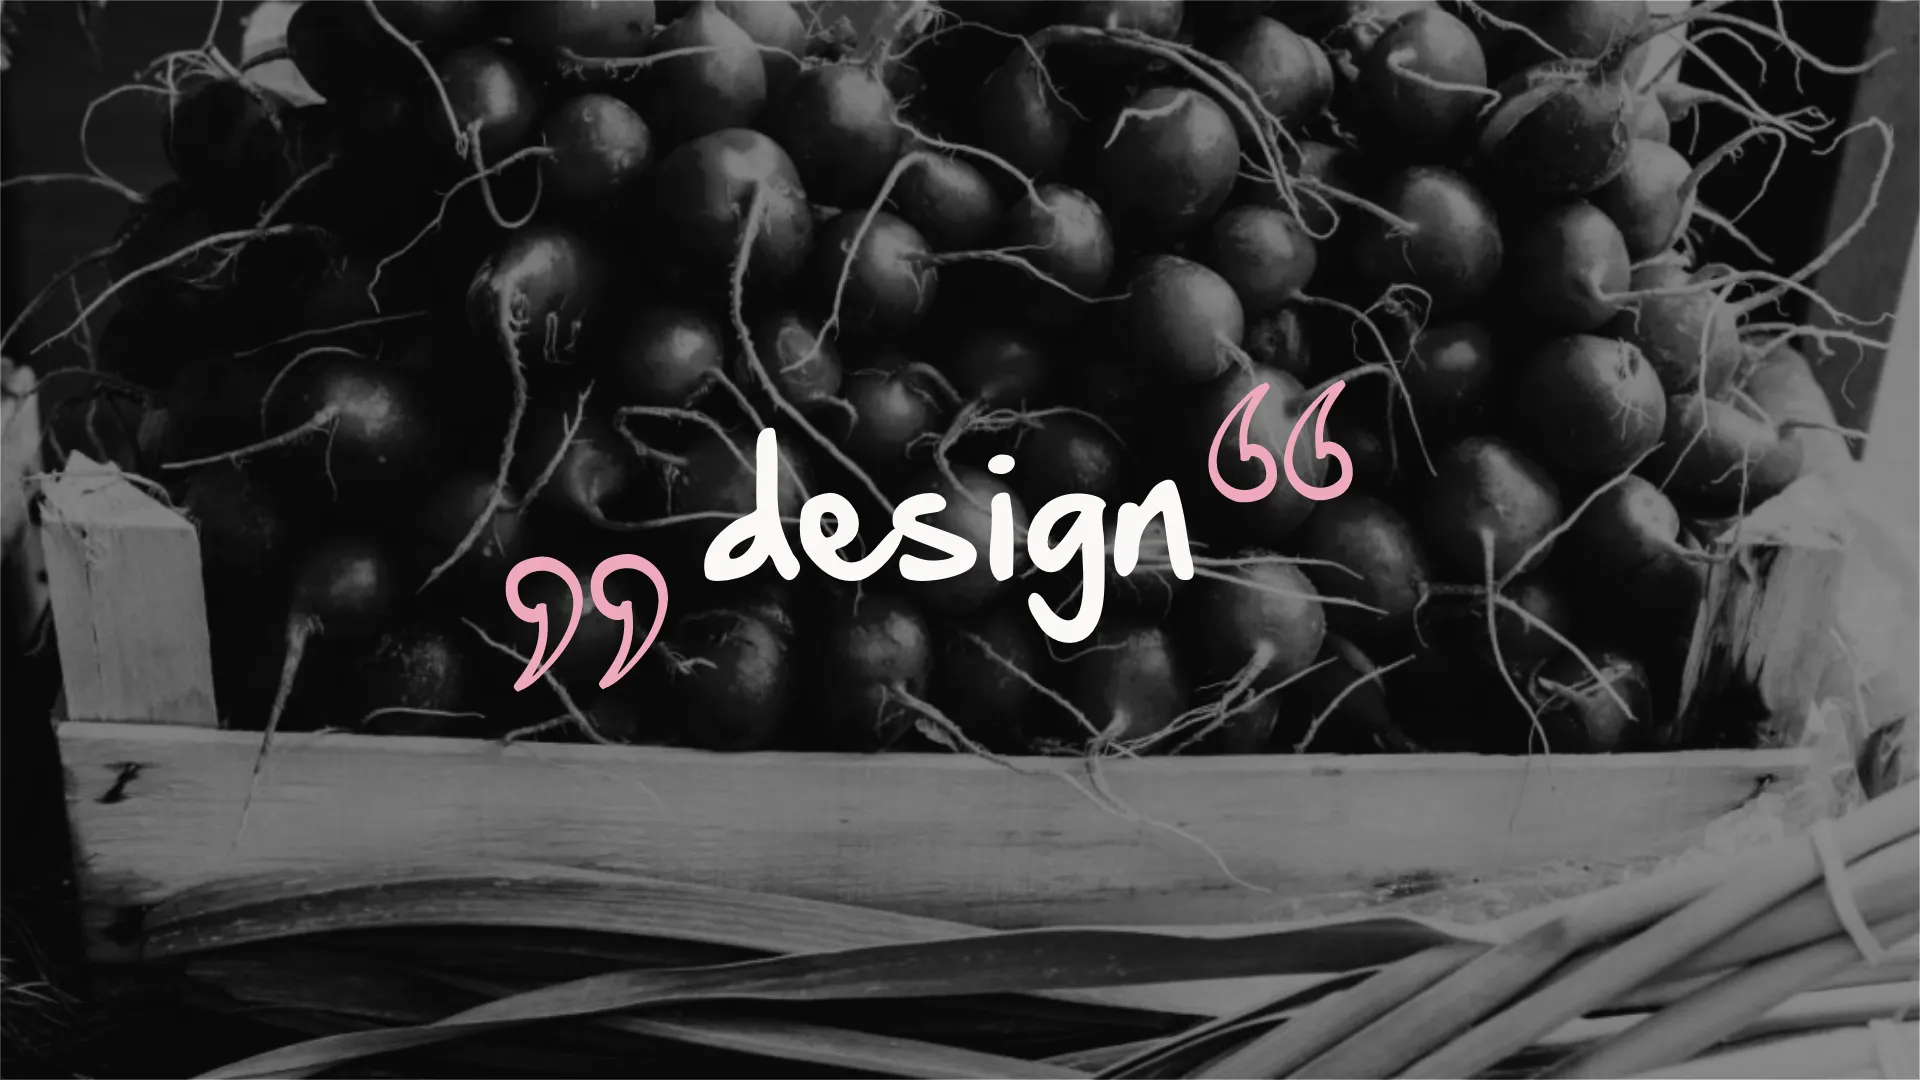 Design is attitude - Design Defined